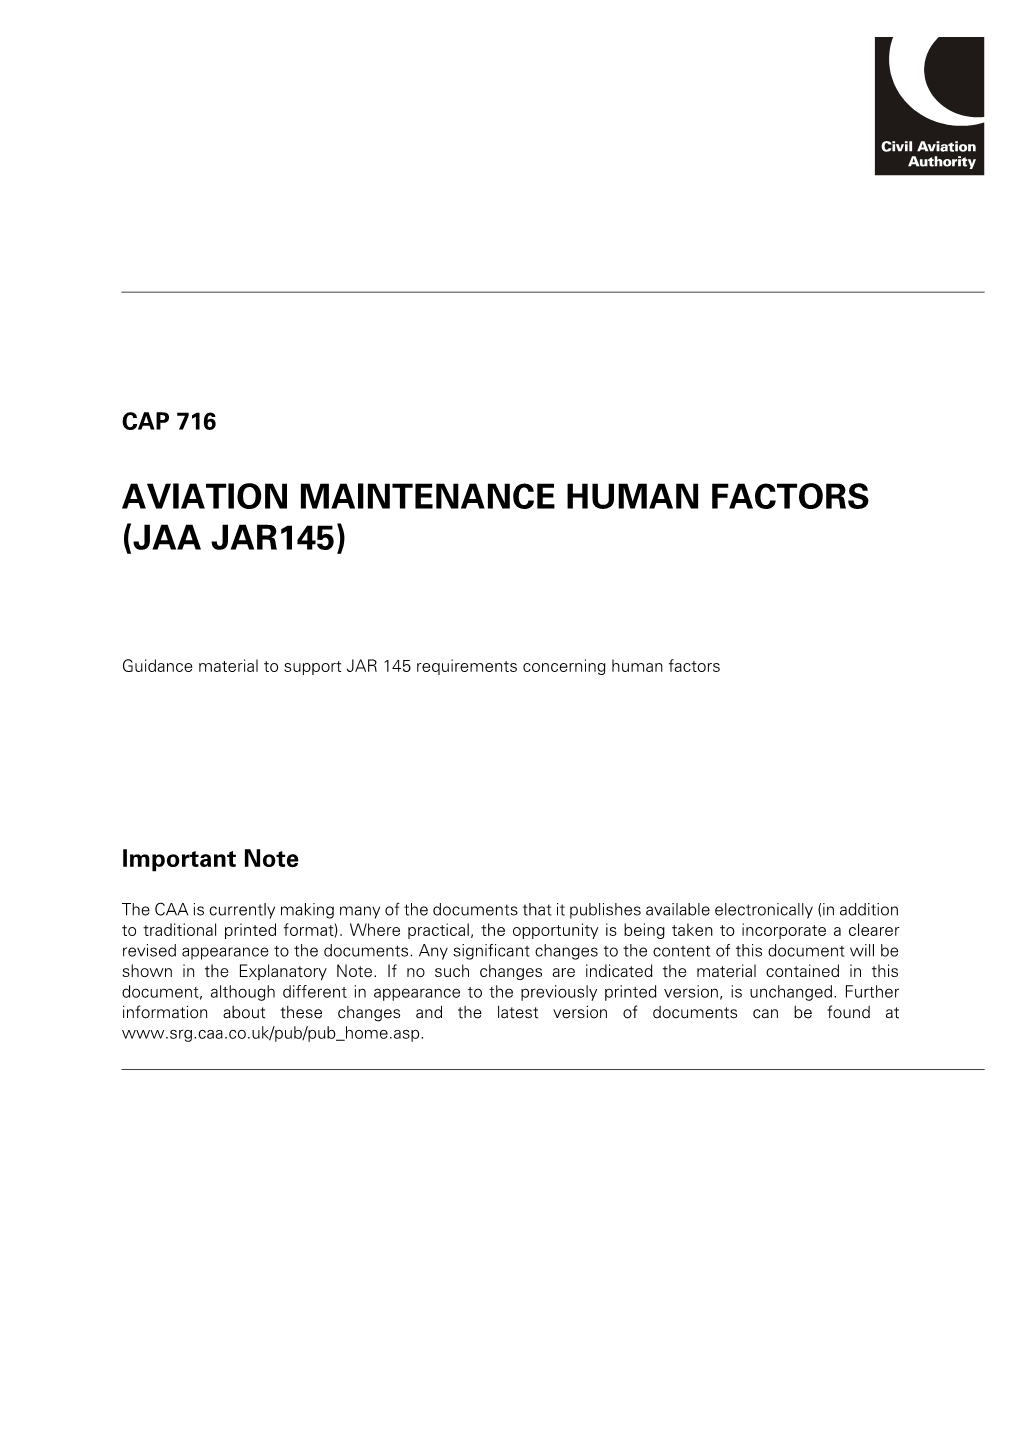 Aviation Maintenance Human Factors (Jaa Jar145)